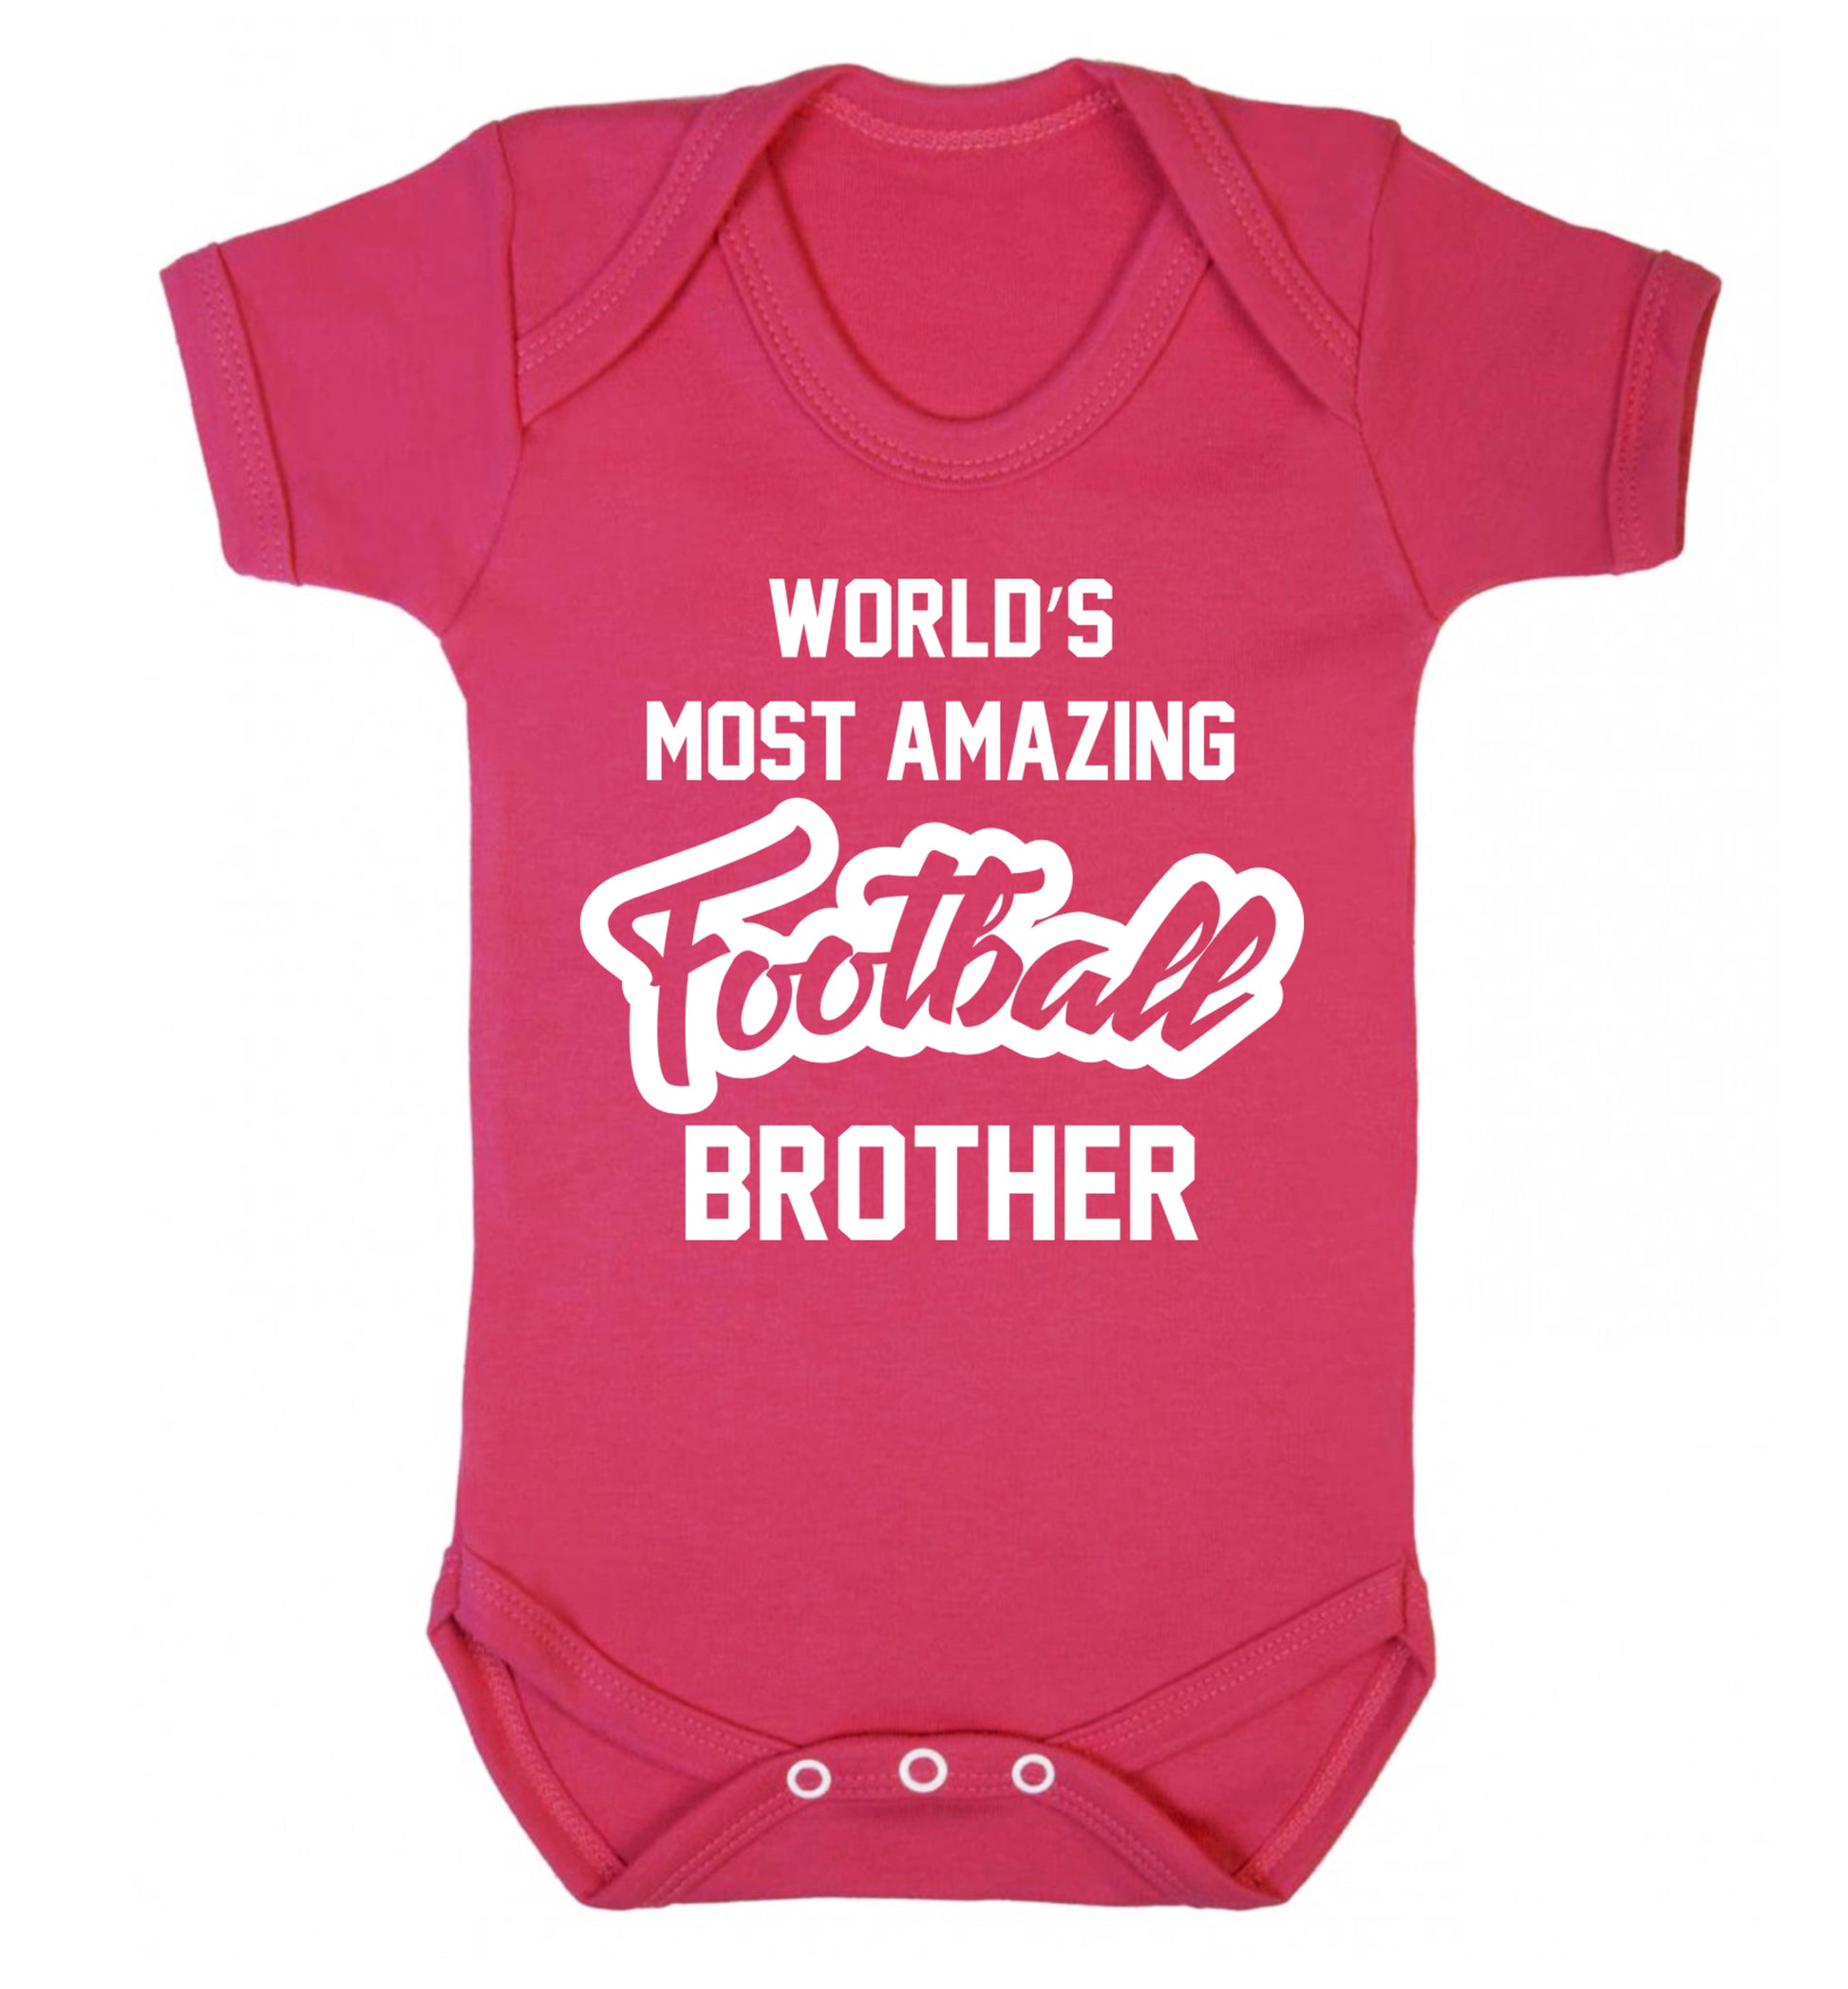 Worlds most amazing football brother Baby Vest dark pink 18-24 months